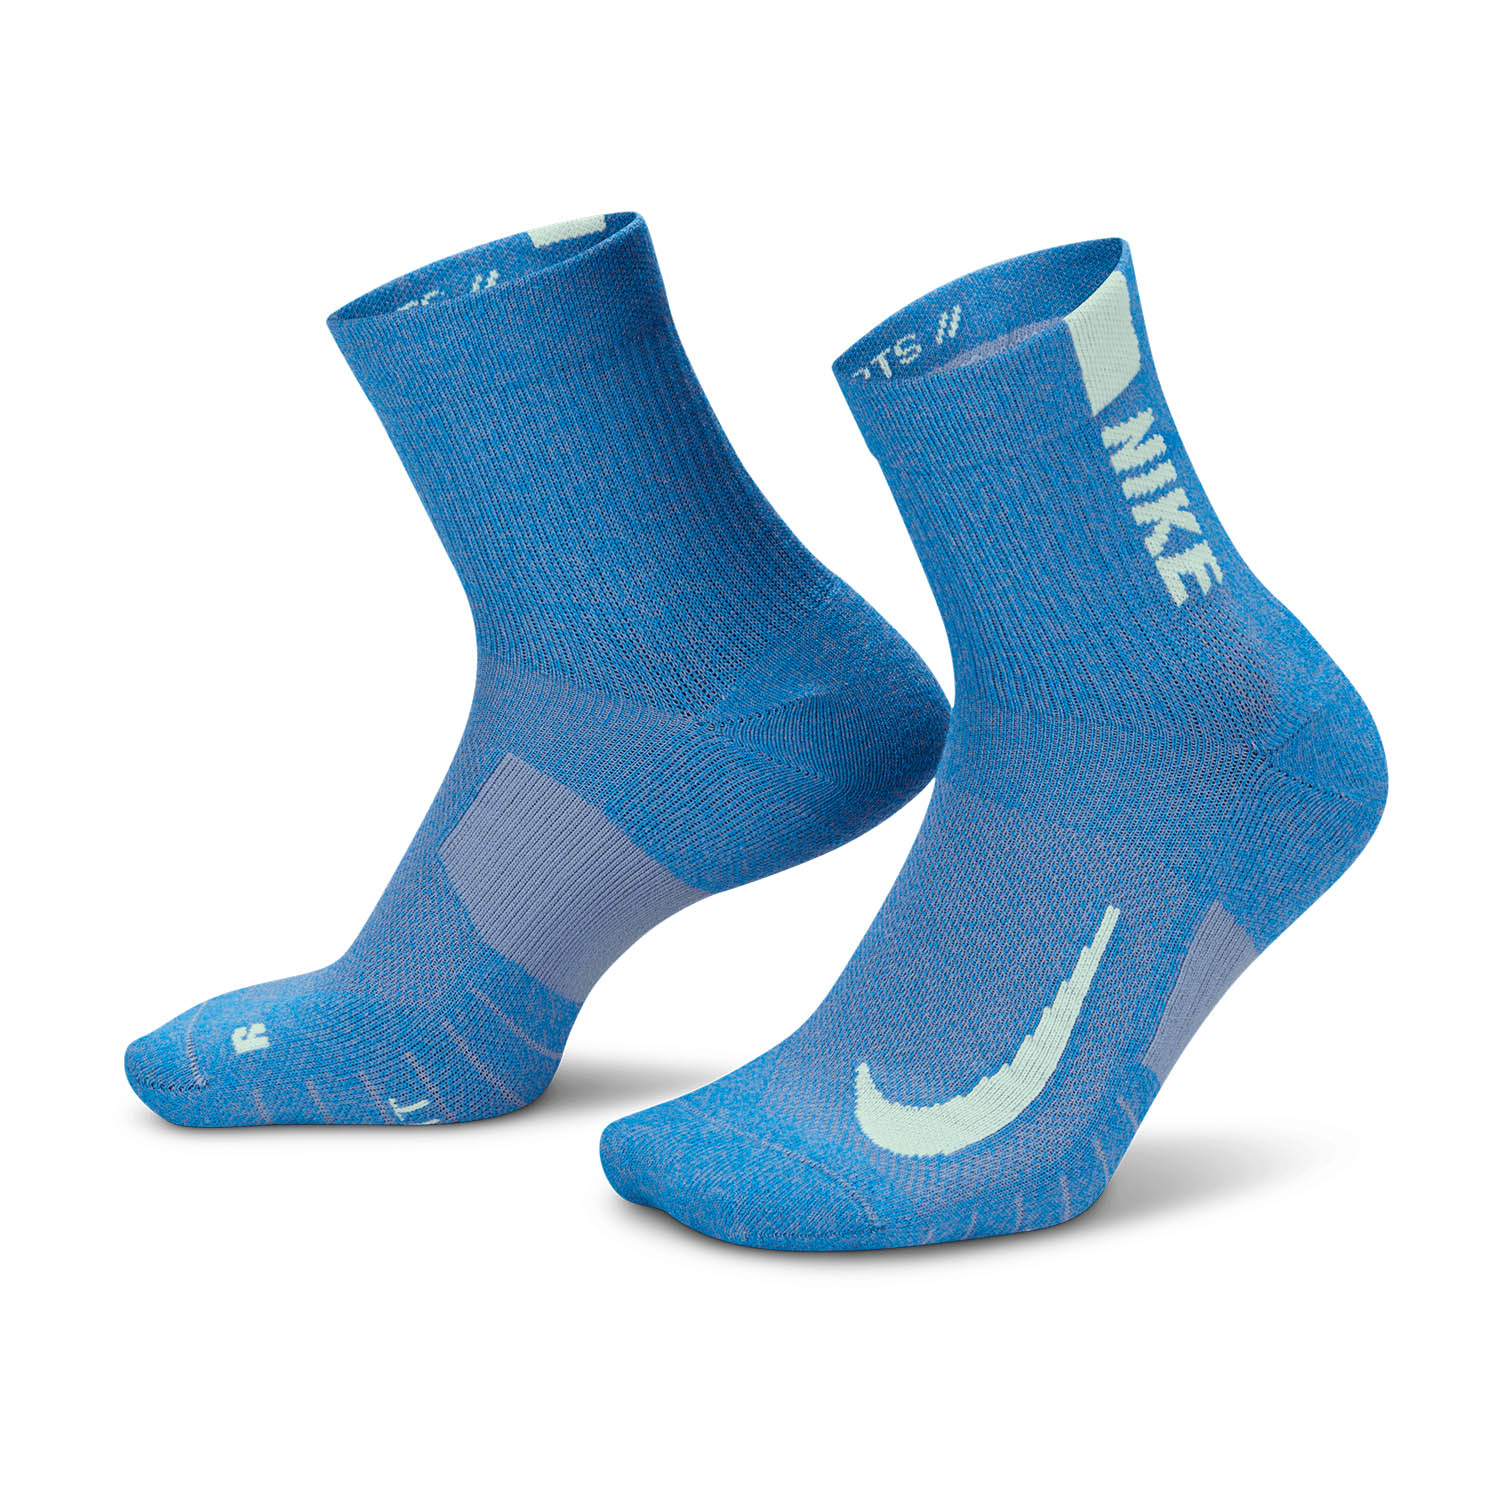 Nike Multiplier x 2 Calze - Light Blue/Fluo Green